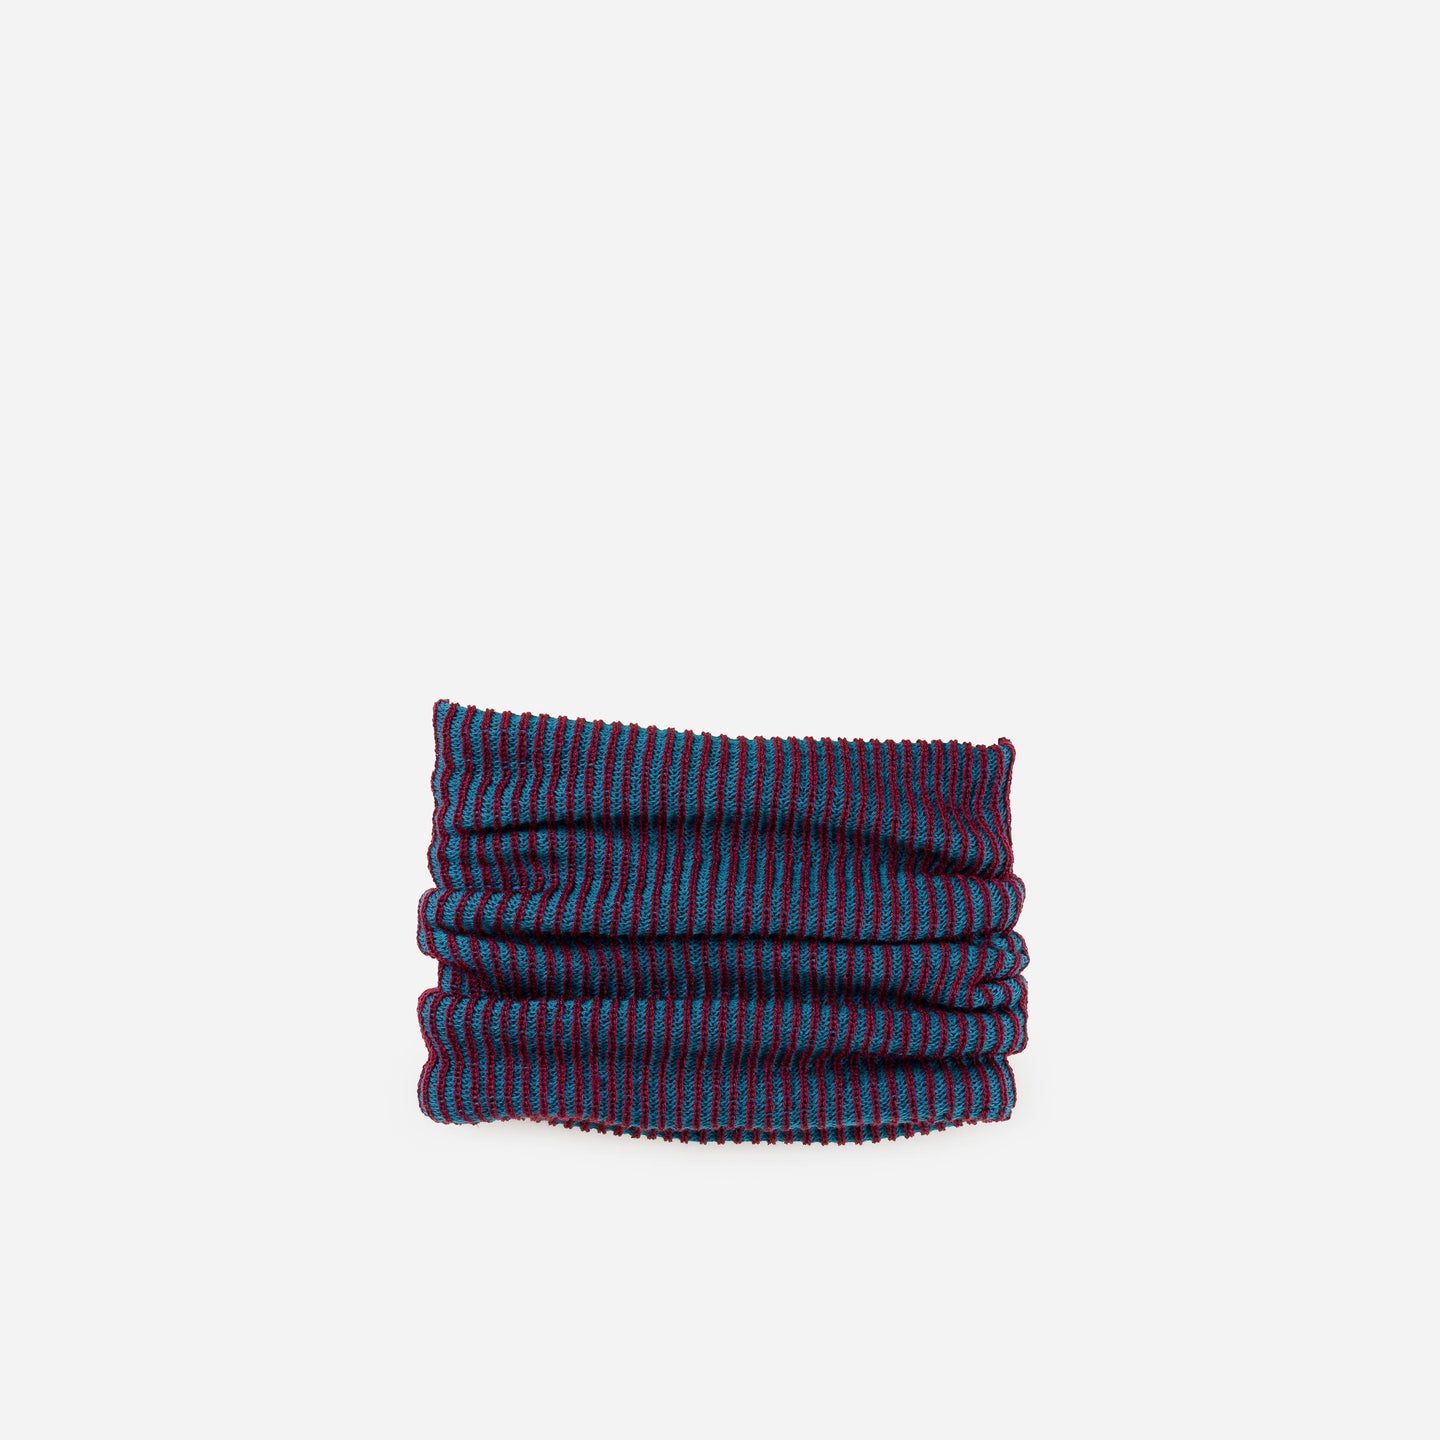 Simple Rib Knit Snood Neckwarmer Stretchy Cozy Turtleneck Stripe Contrast